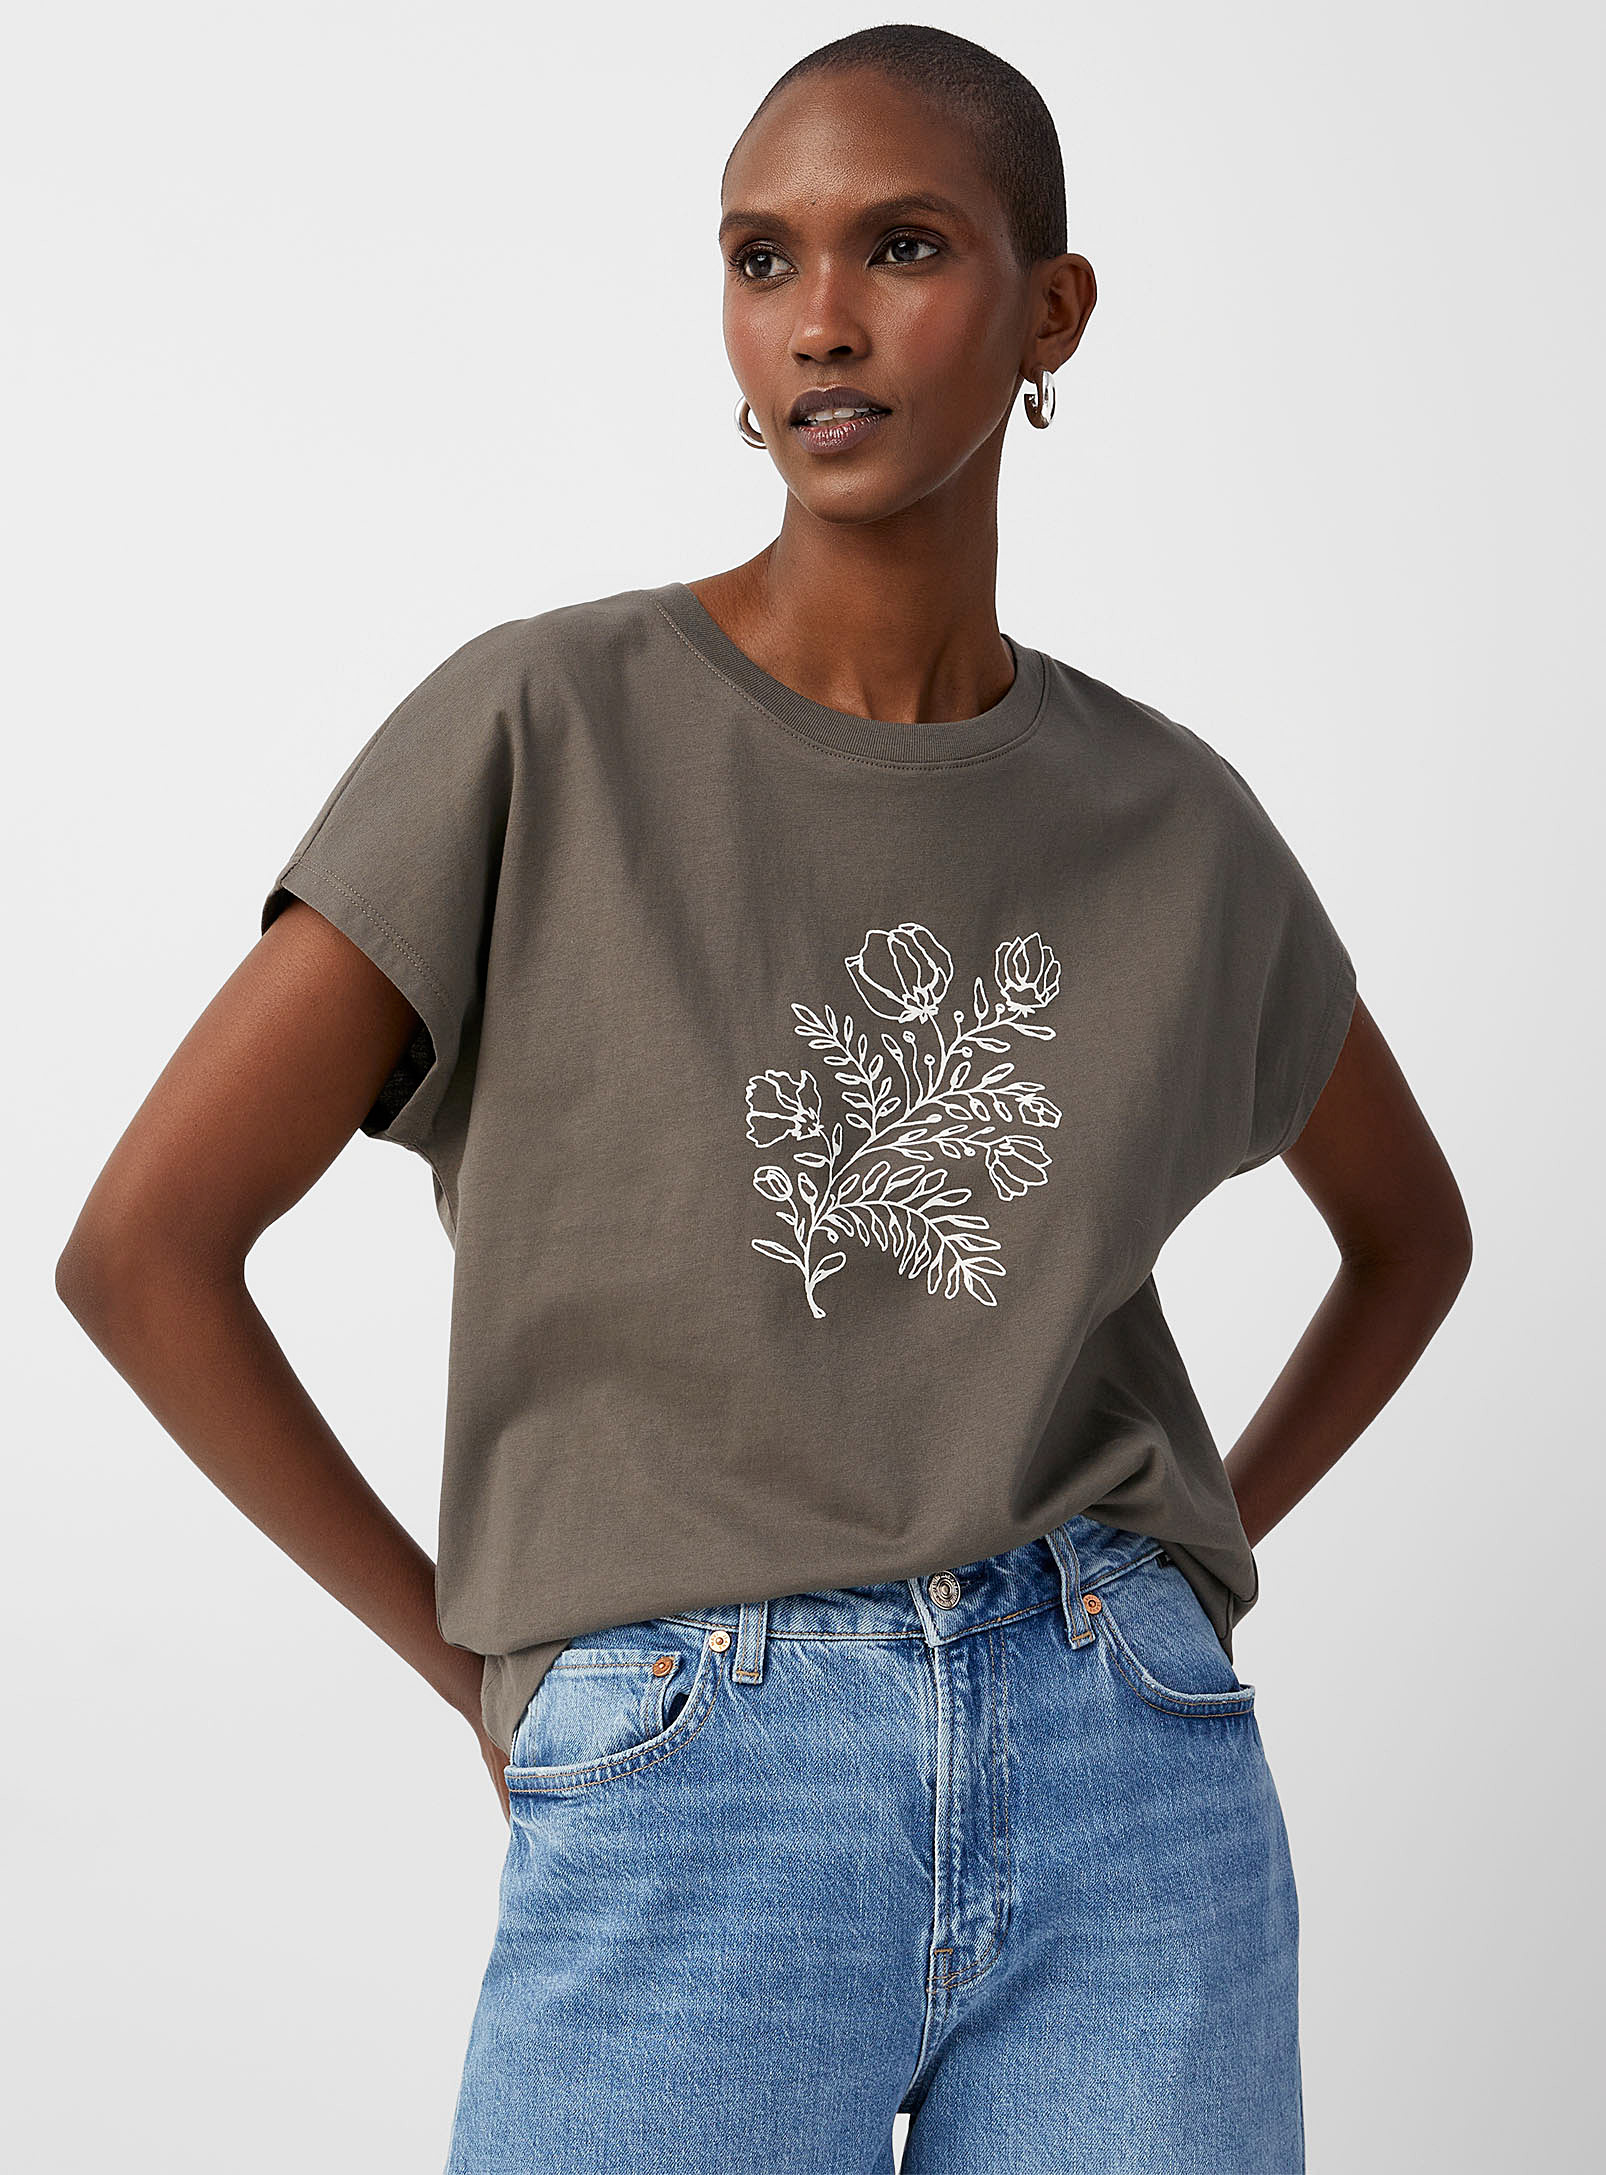 Contemporaine Cap-sleeve Printed T-shirt In Khaki/sage/olive